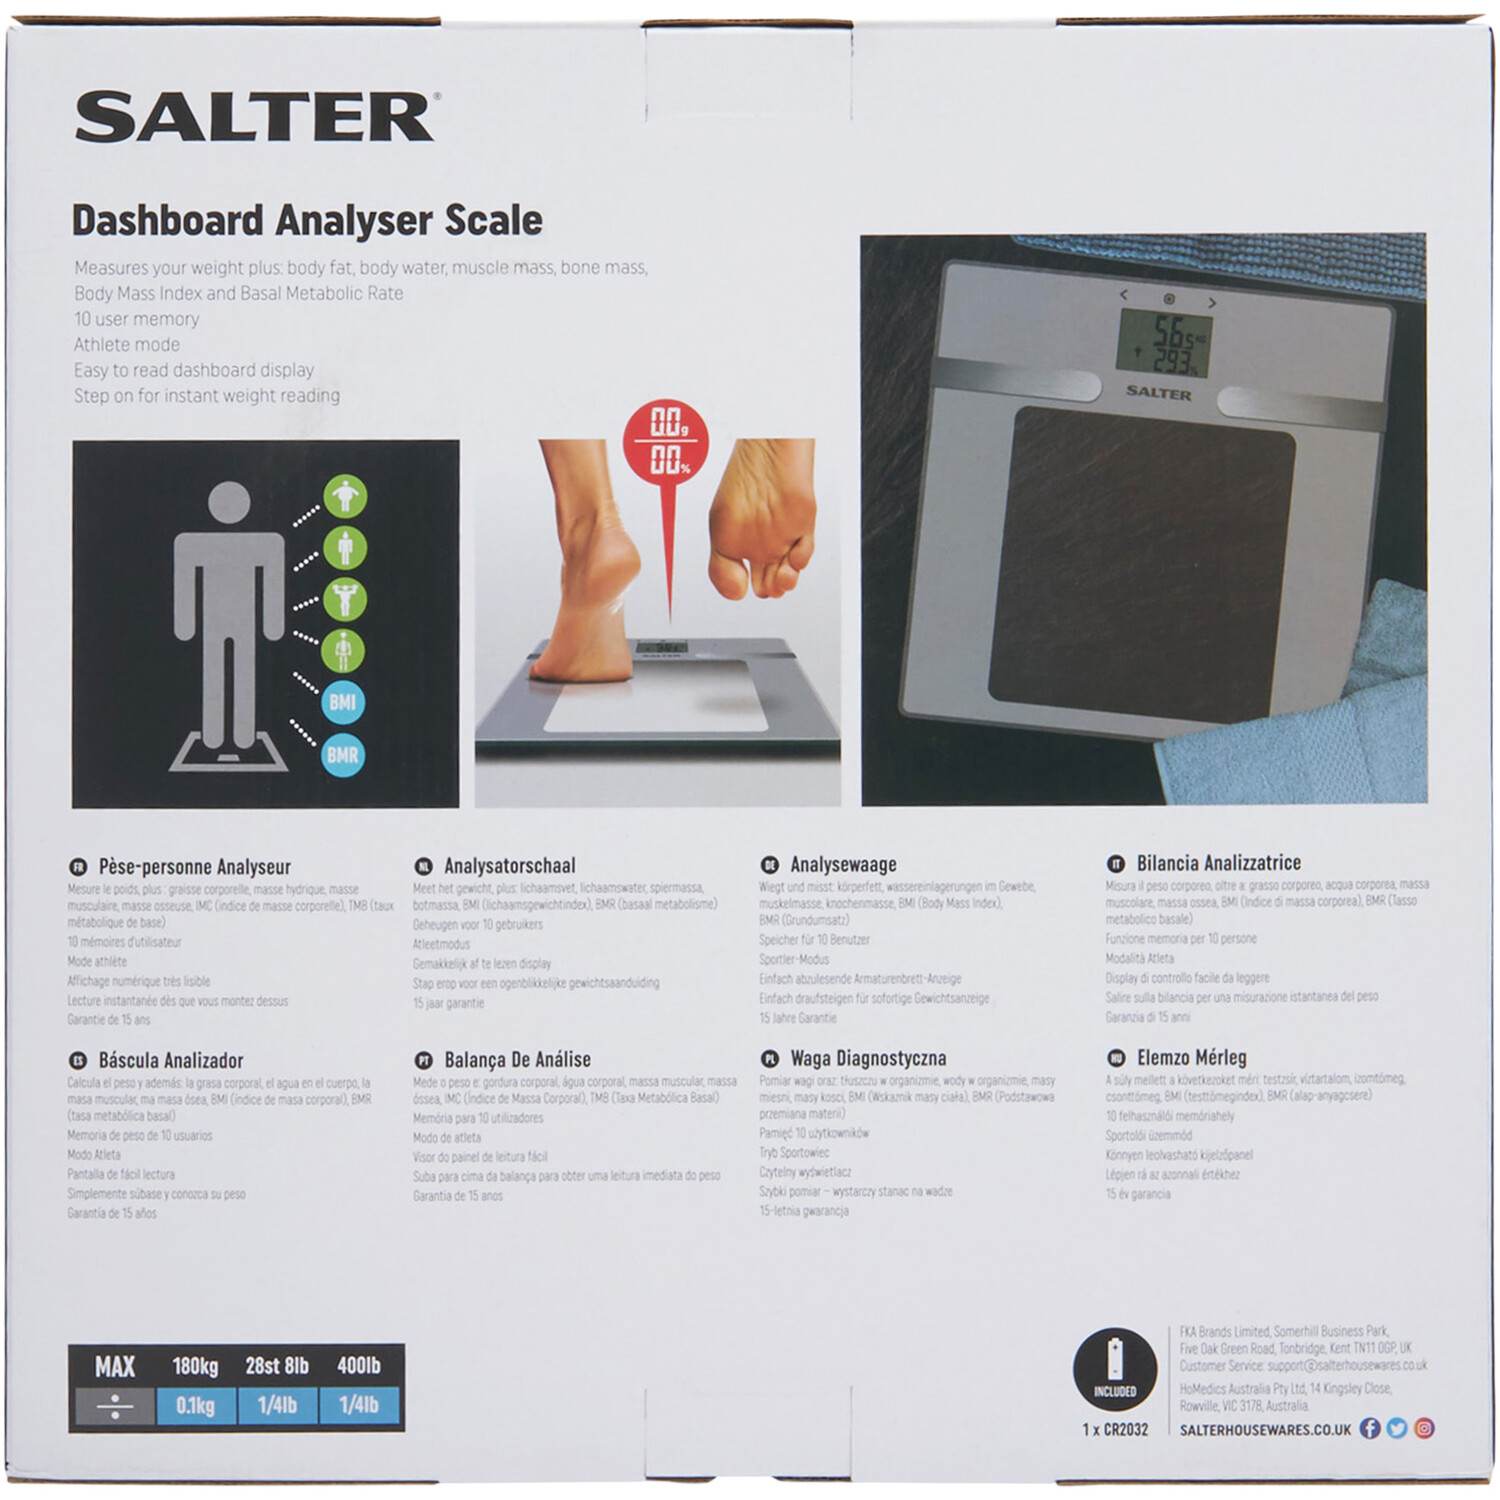 Salter Dashboard Analyser Scale Image 4